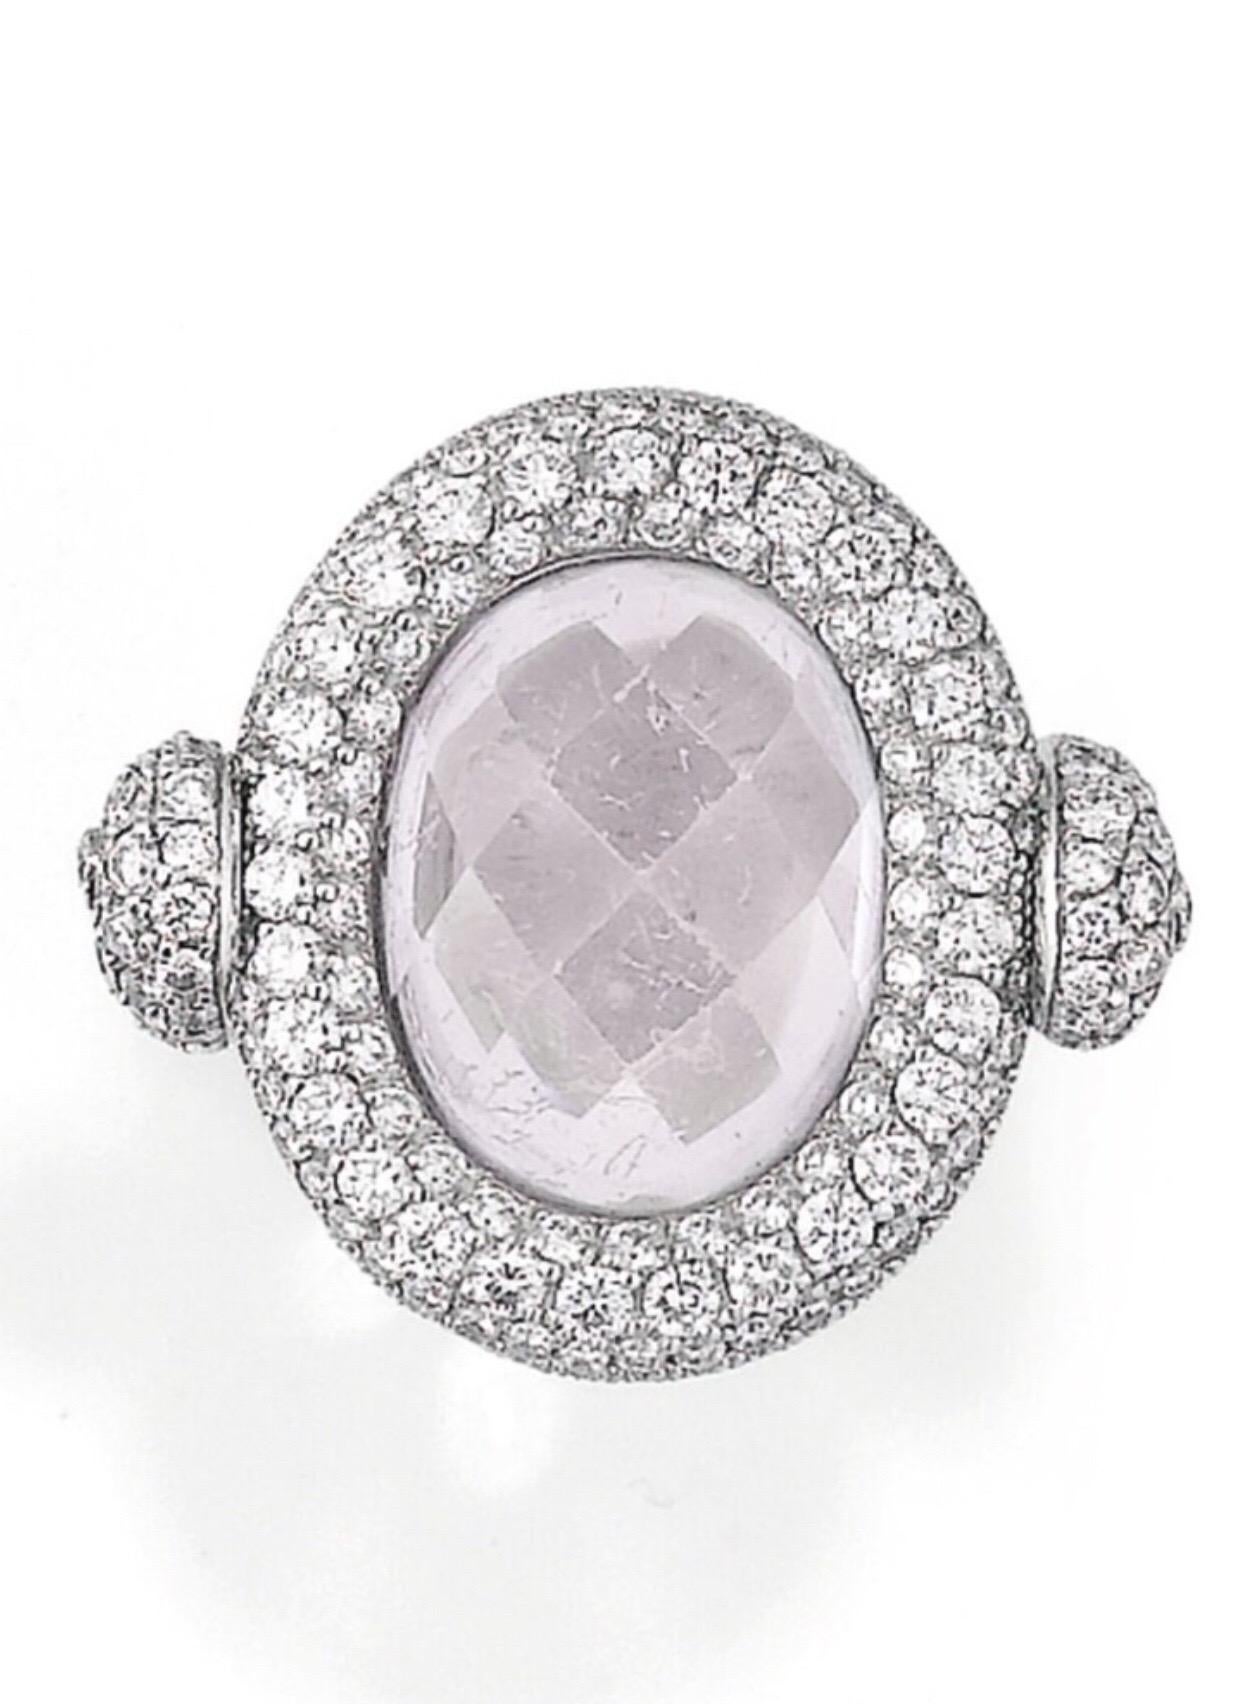 Diamond Sapphire Kunzite Rotating Ring de Grisogono 18 Karat White Gold 8